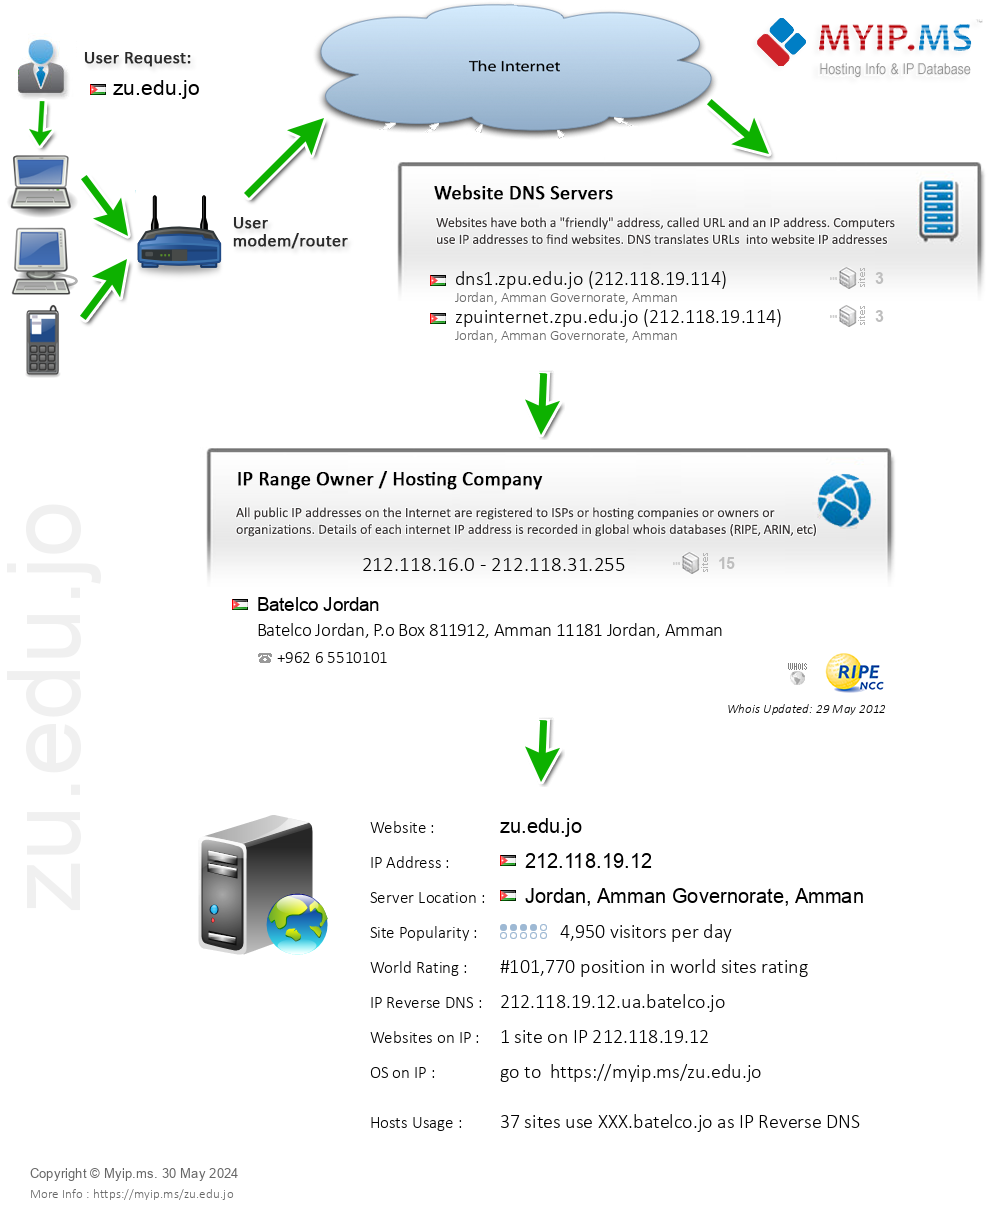 Zu.edu.jo - Website Hosting Visual IP Diagram